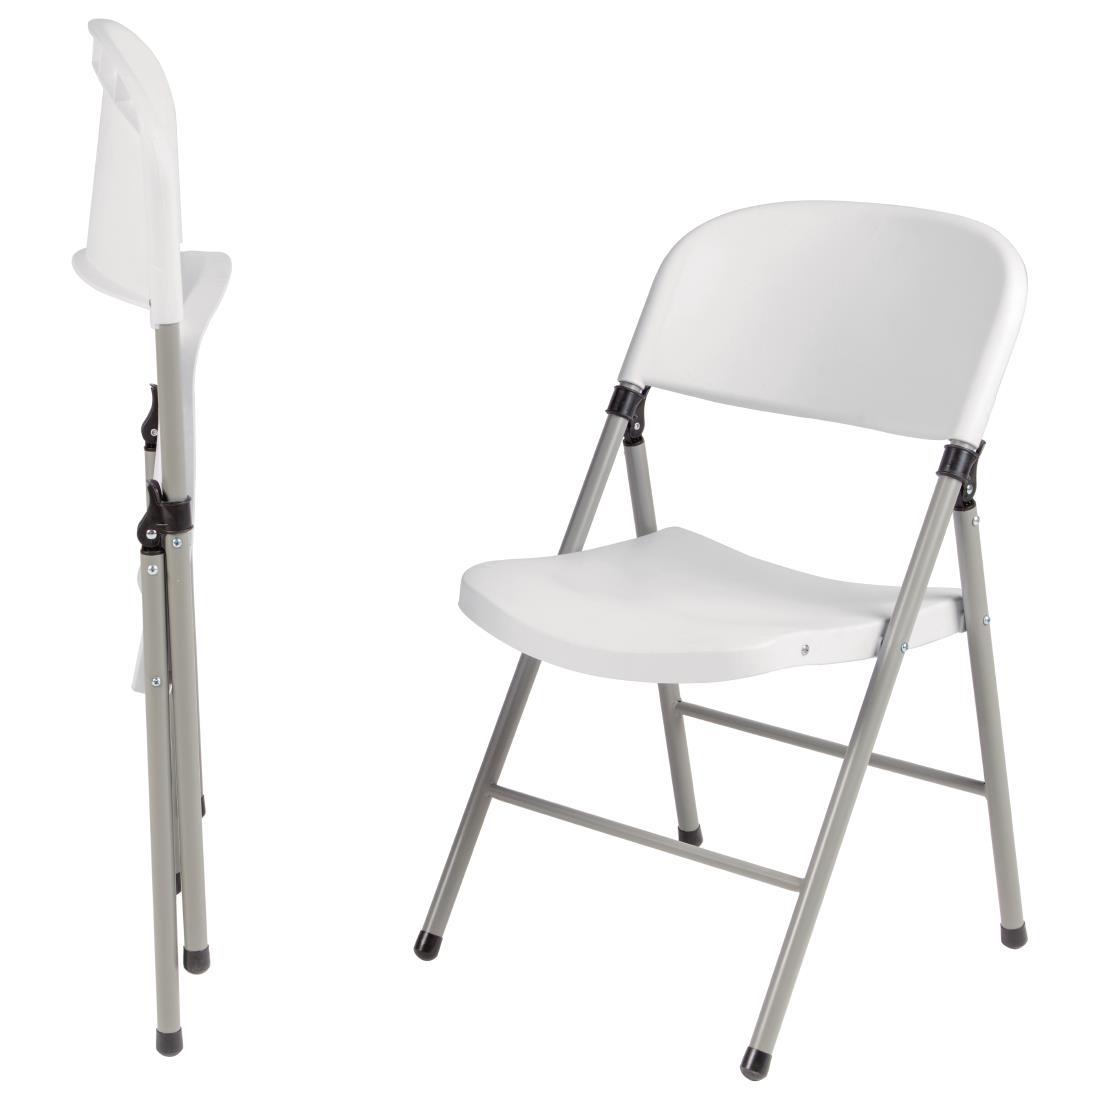 Bolero Foldaway Utility Chairs White (Pack of 2) - CE692  - 5